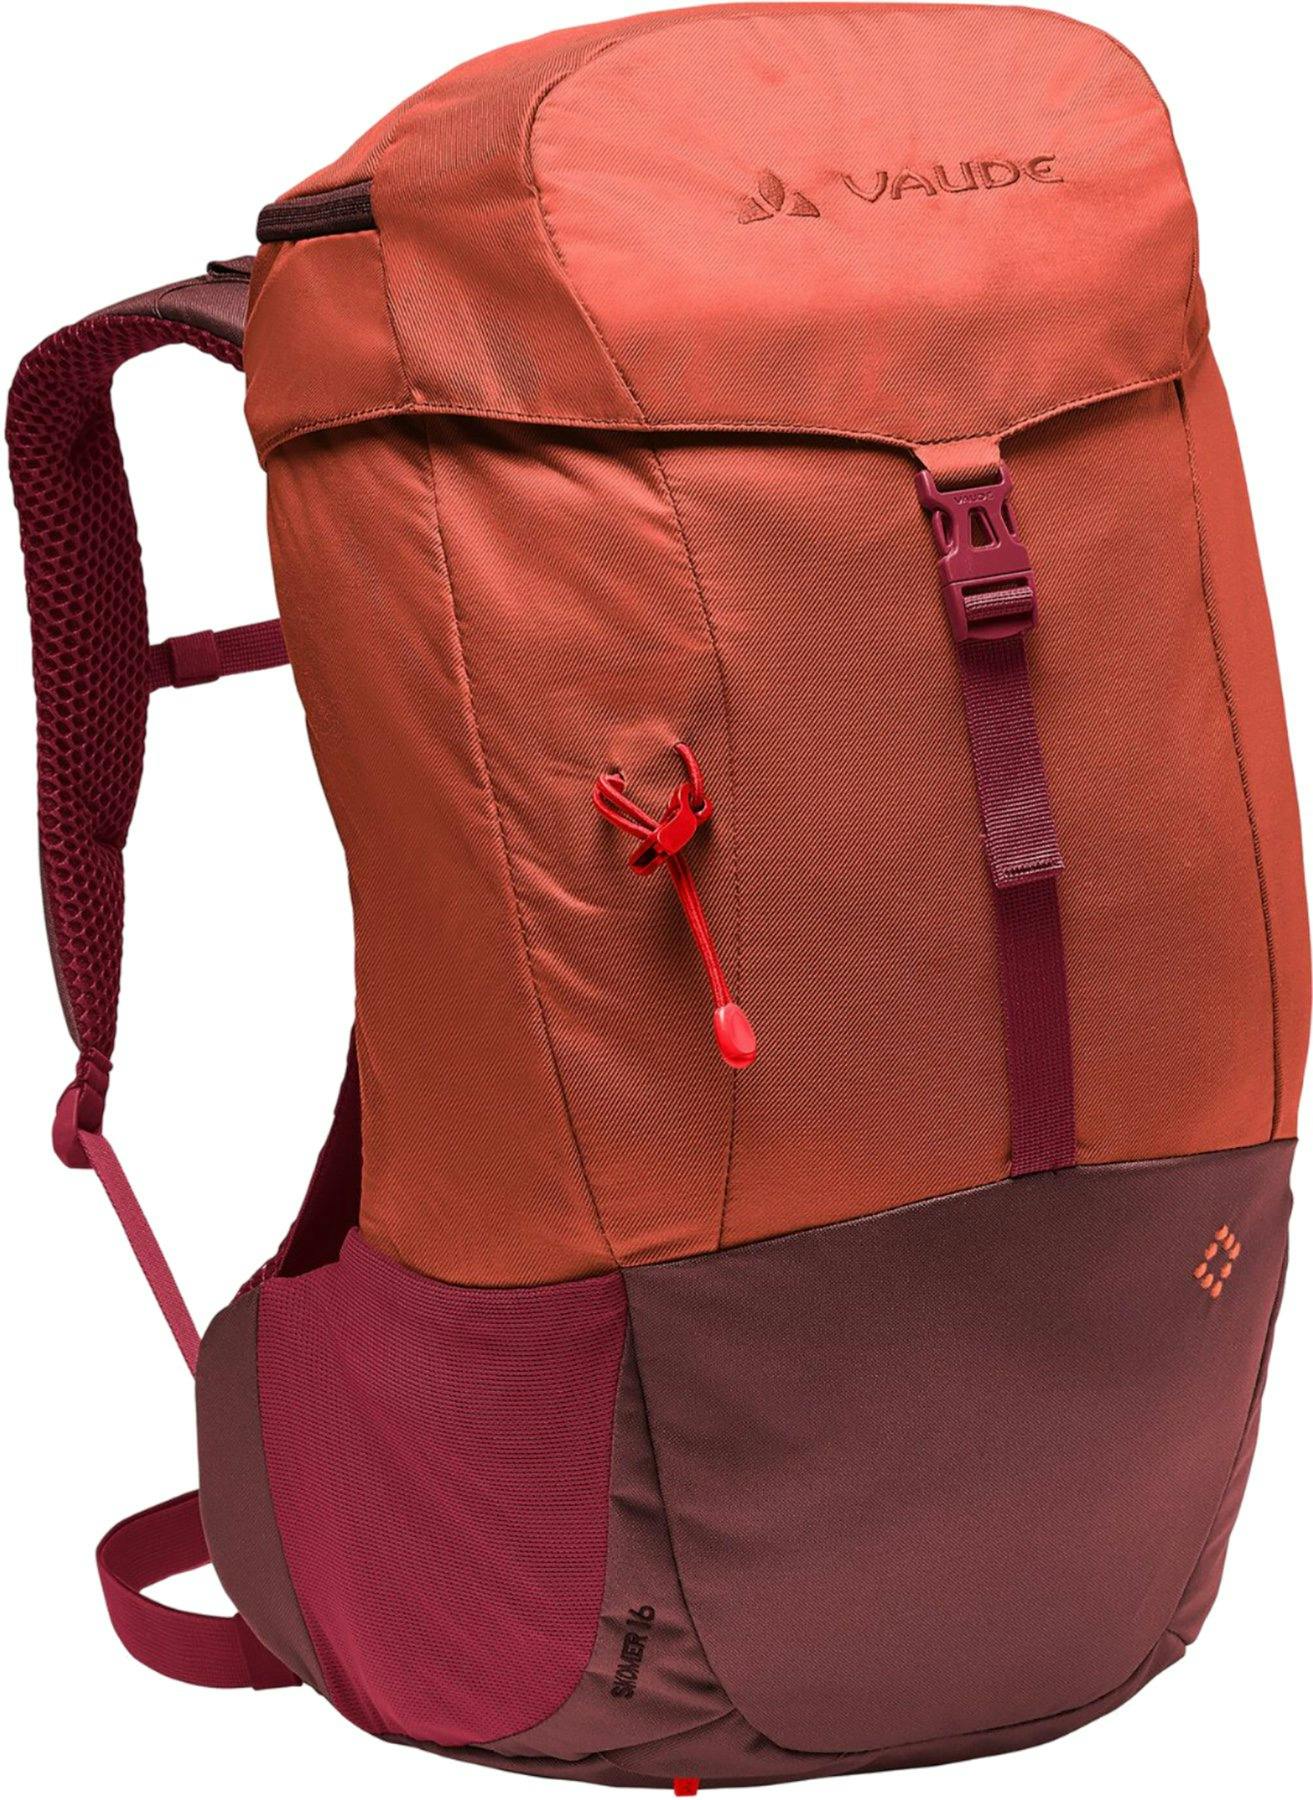 Product image for Skomer Hiking Backpack 16L - Women's